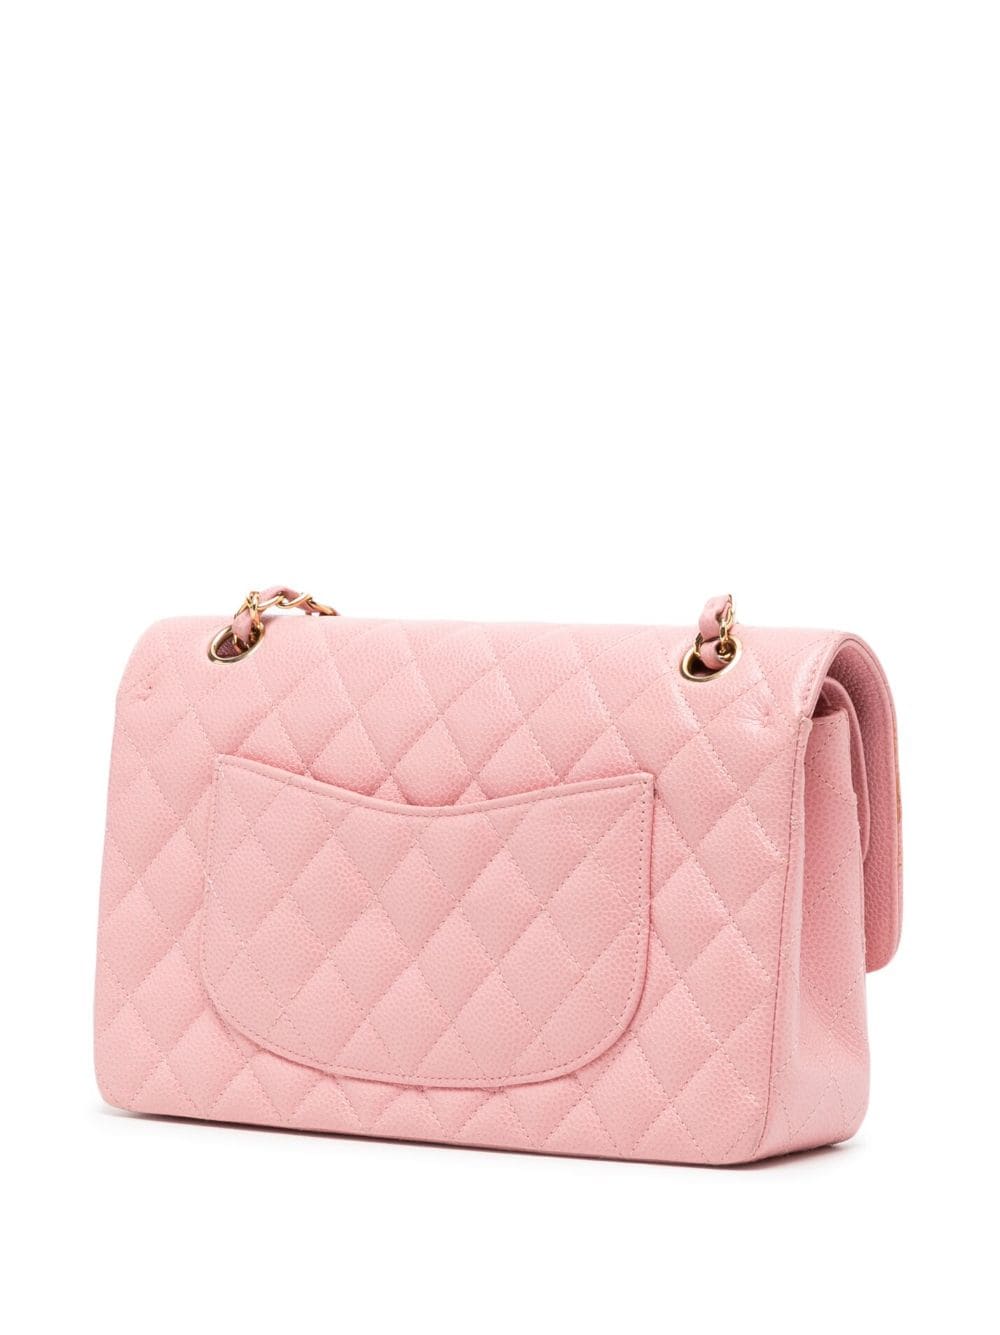 Chanel Double Flap Shoulder Bag